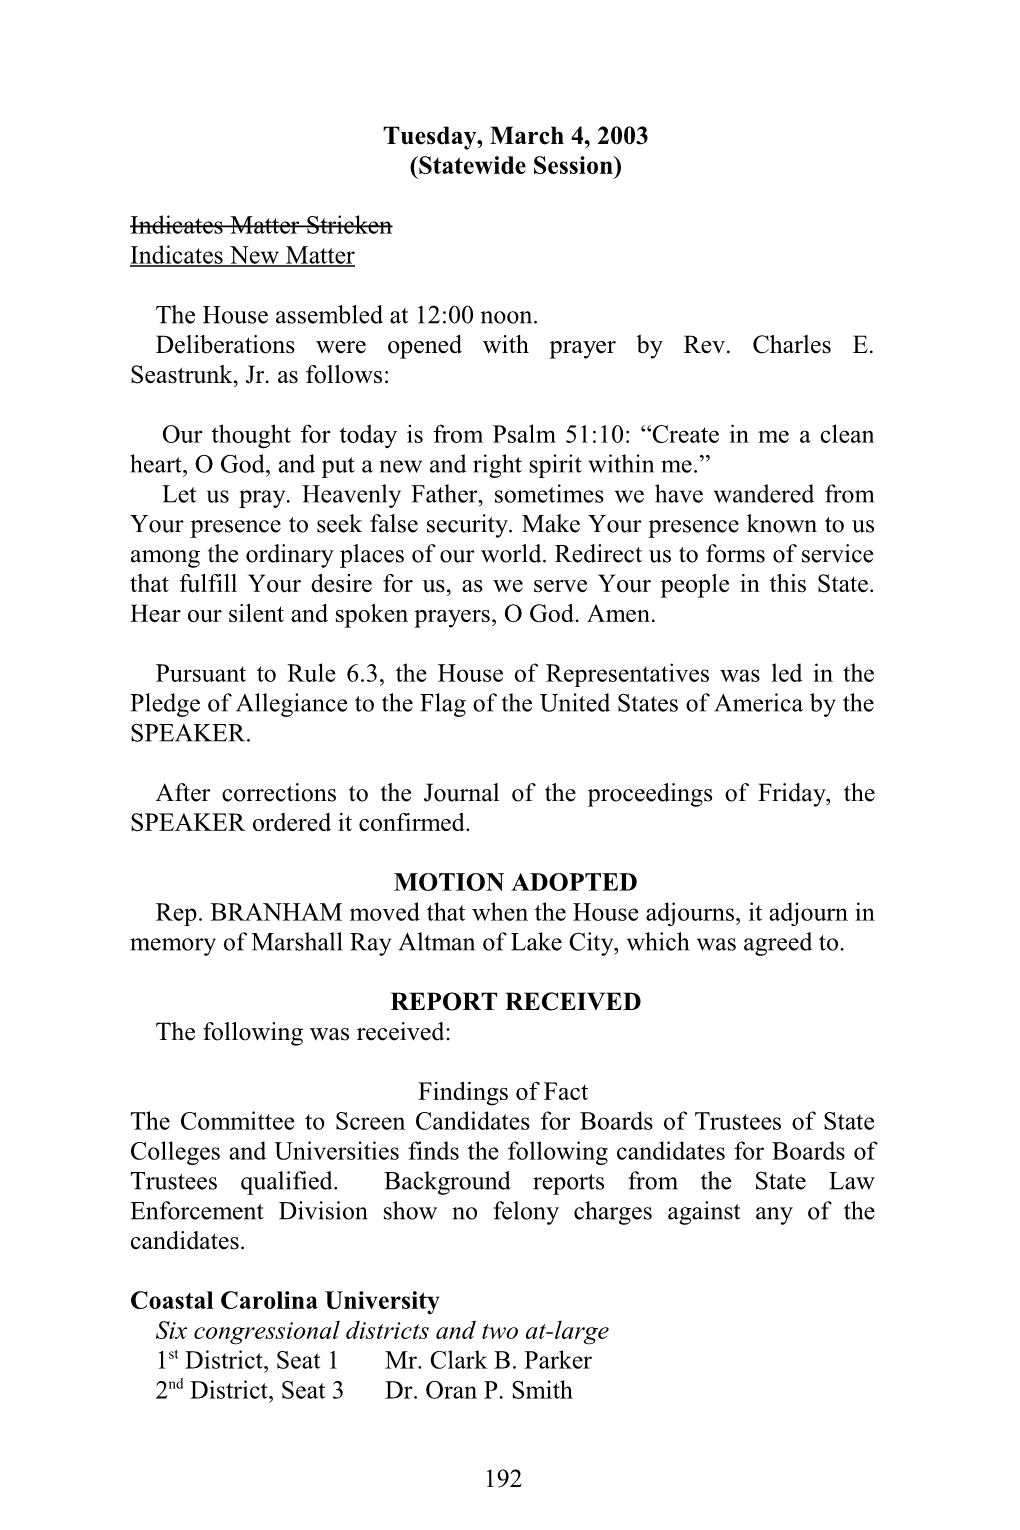 House Journal for Mar. 4, 2003 - South Carolina Legislature Online